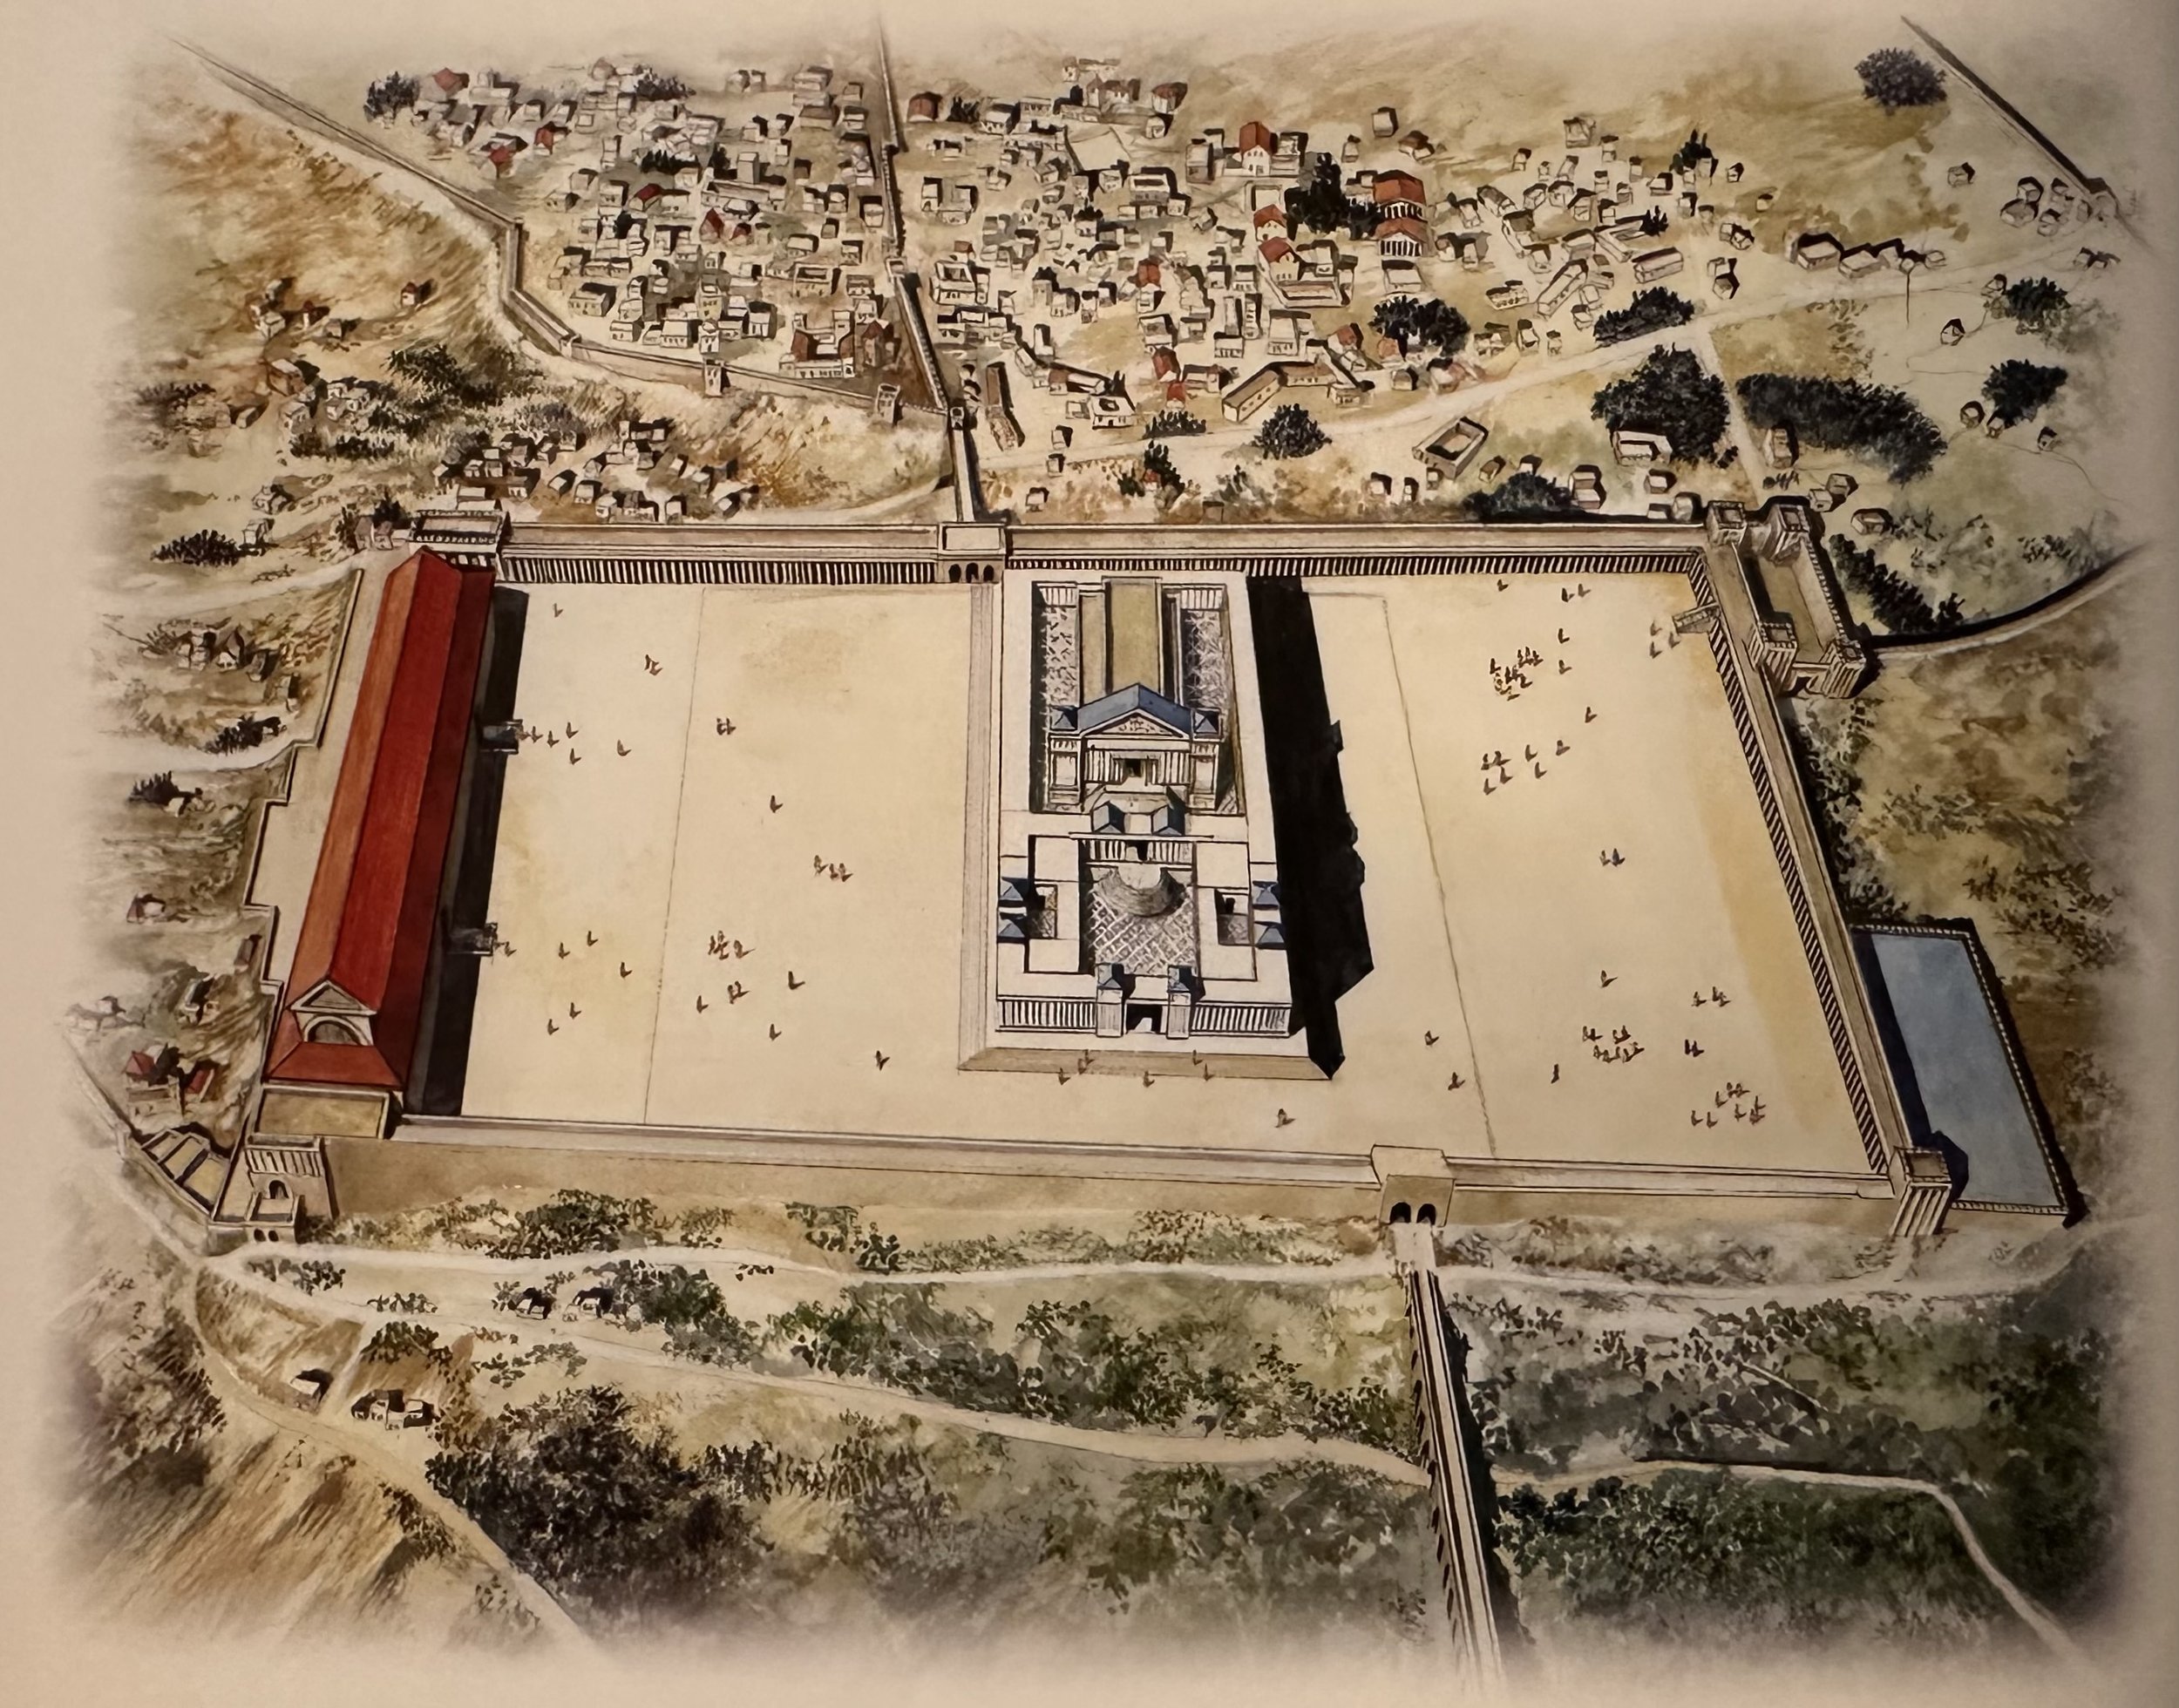 37 BCE King Herods Temple Atlas of the Bible.jpeg